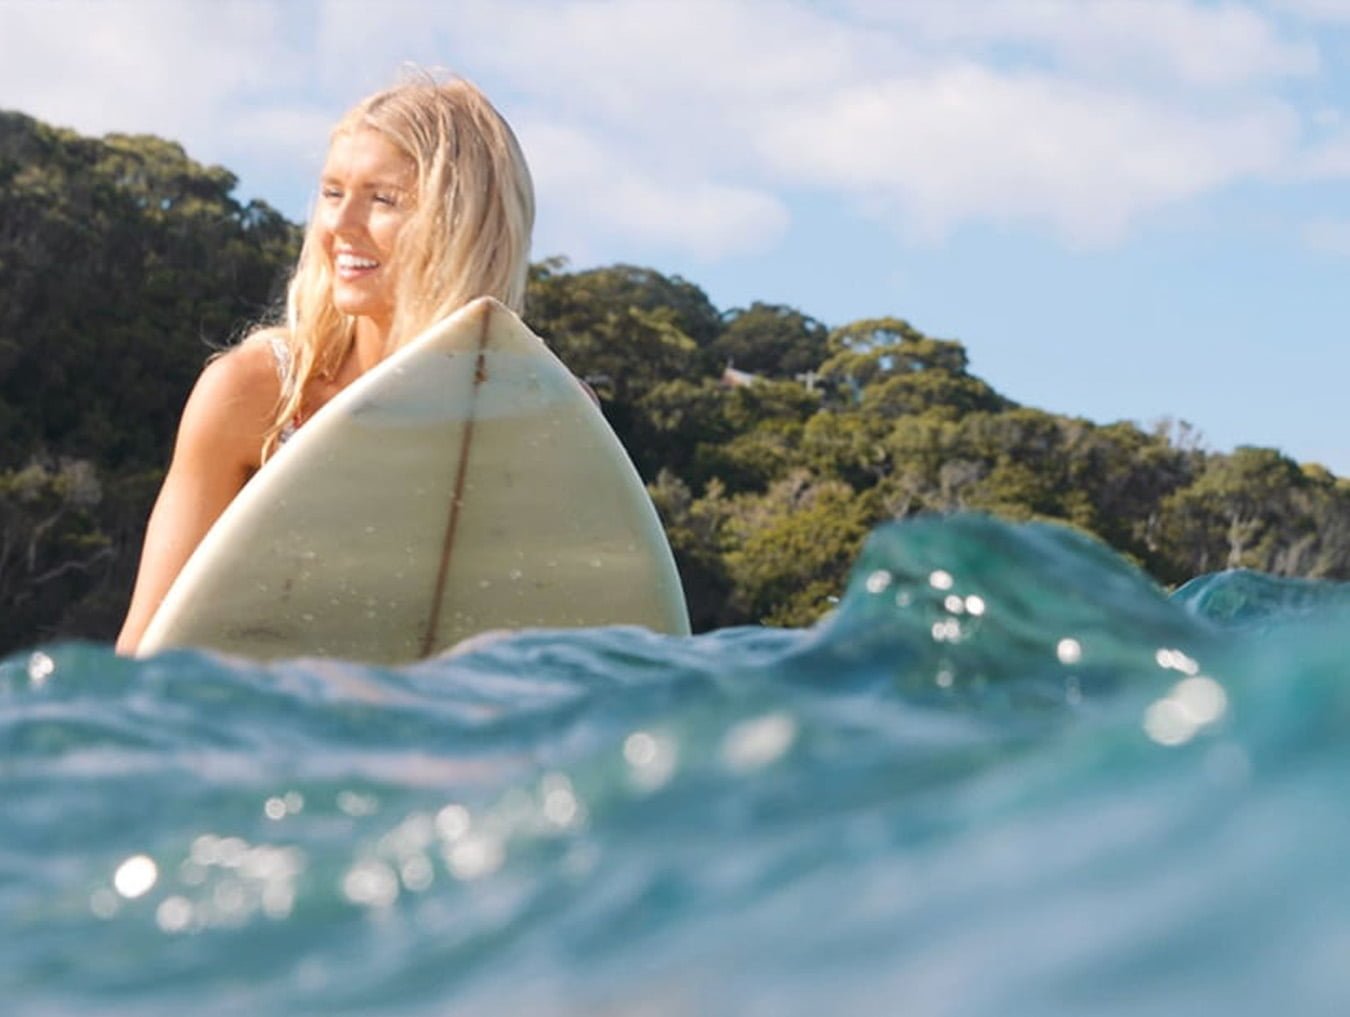 Surfing and Byron Bay - A Natural Partnership